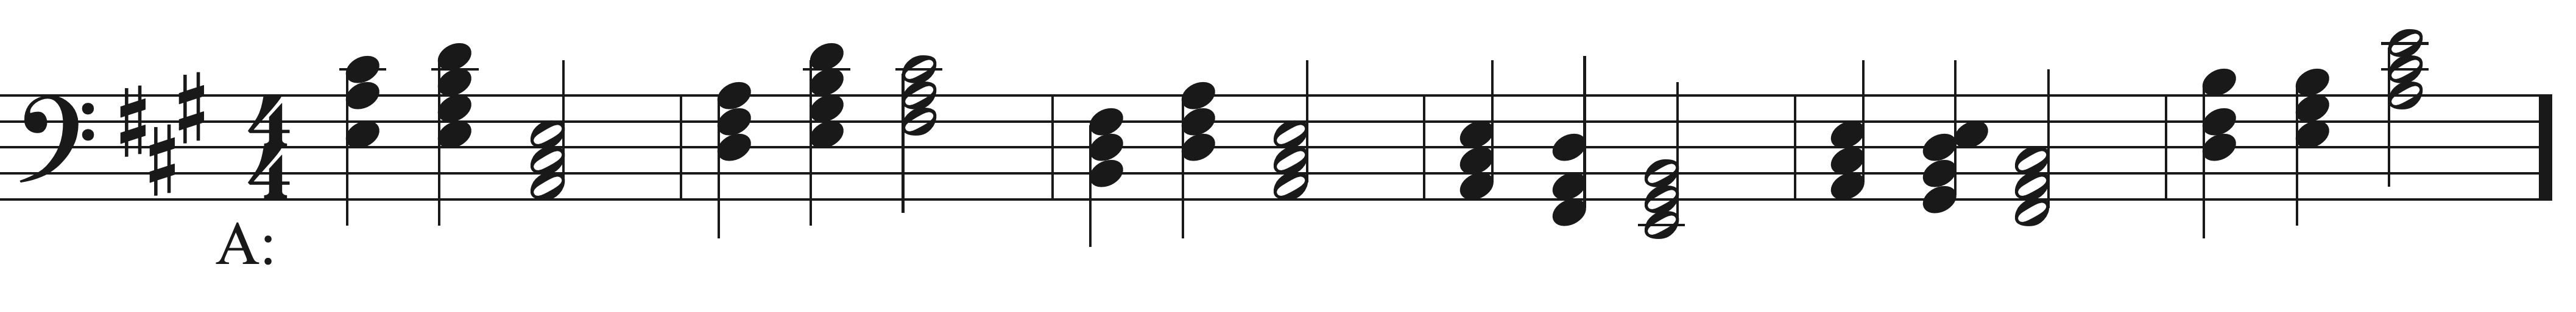 Cadences Sight Singing exercise example